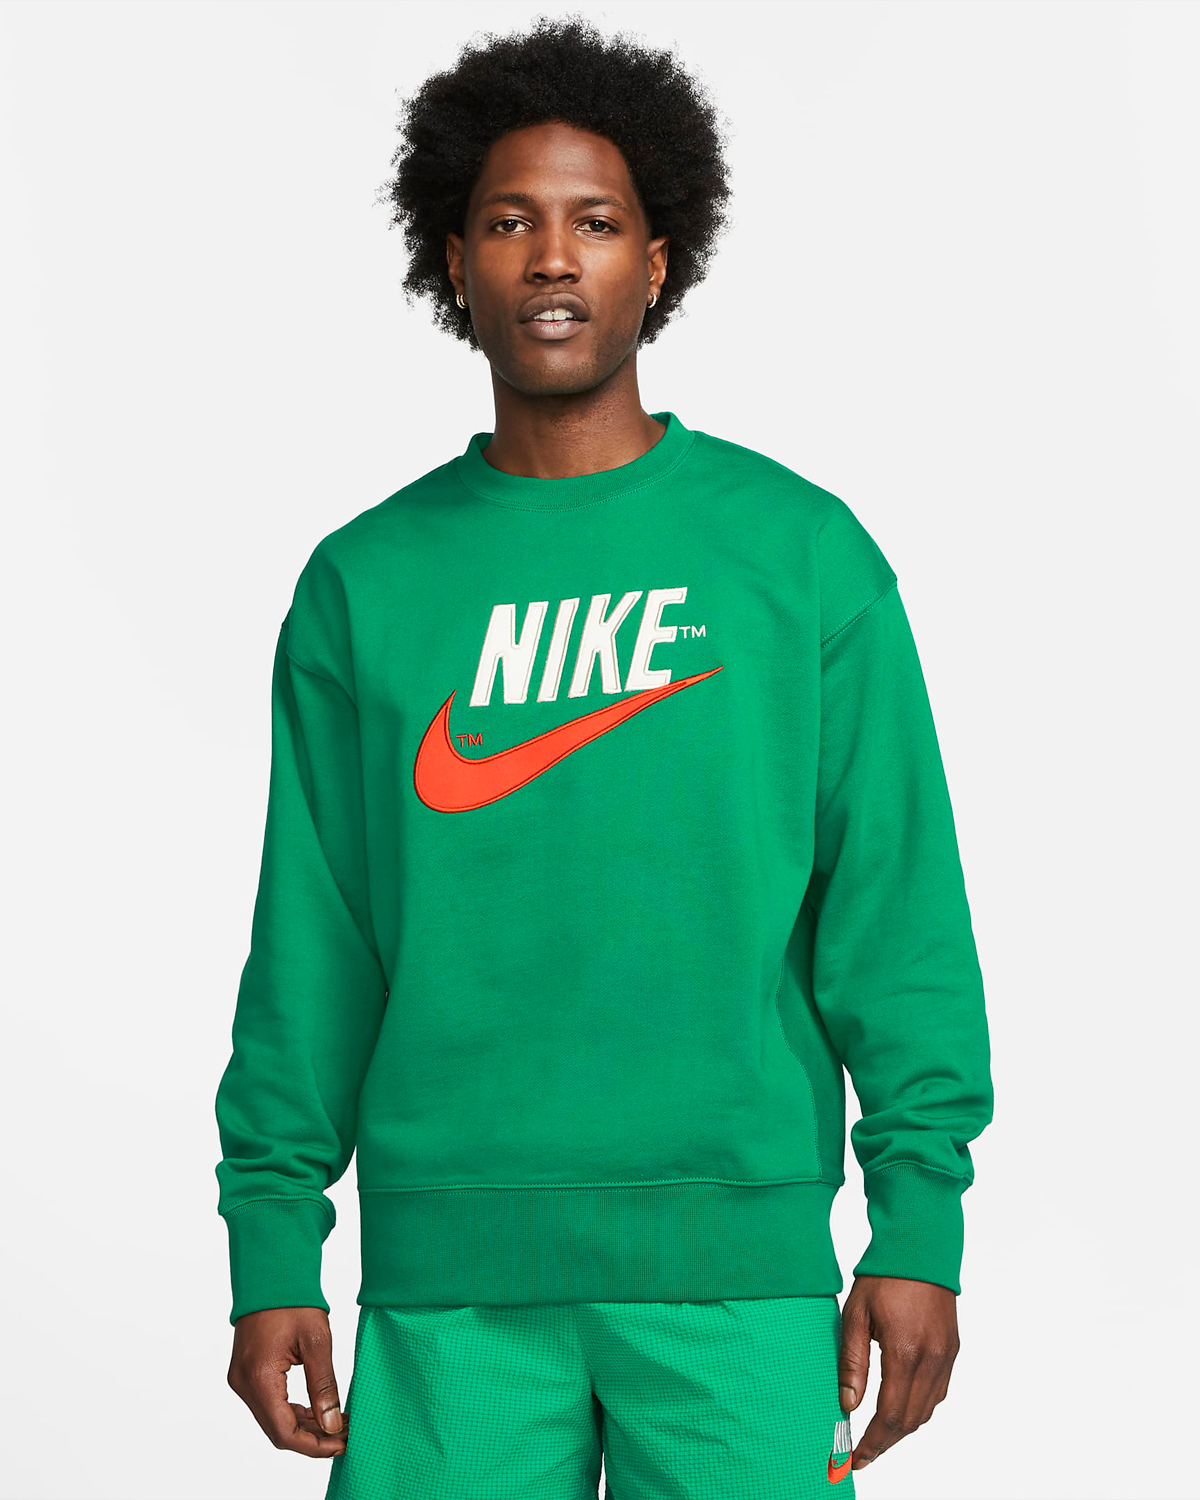 Nike-Malachite-Green-Sweatshirt